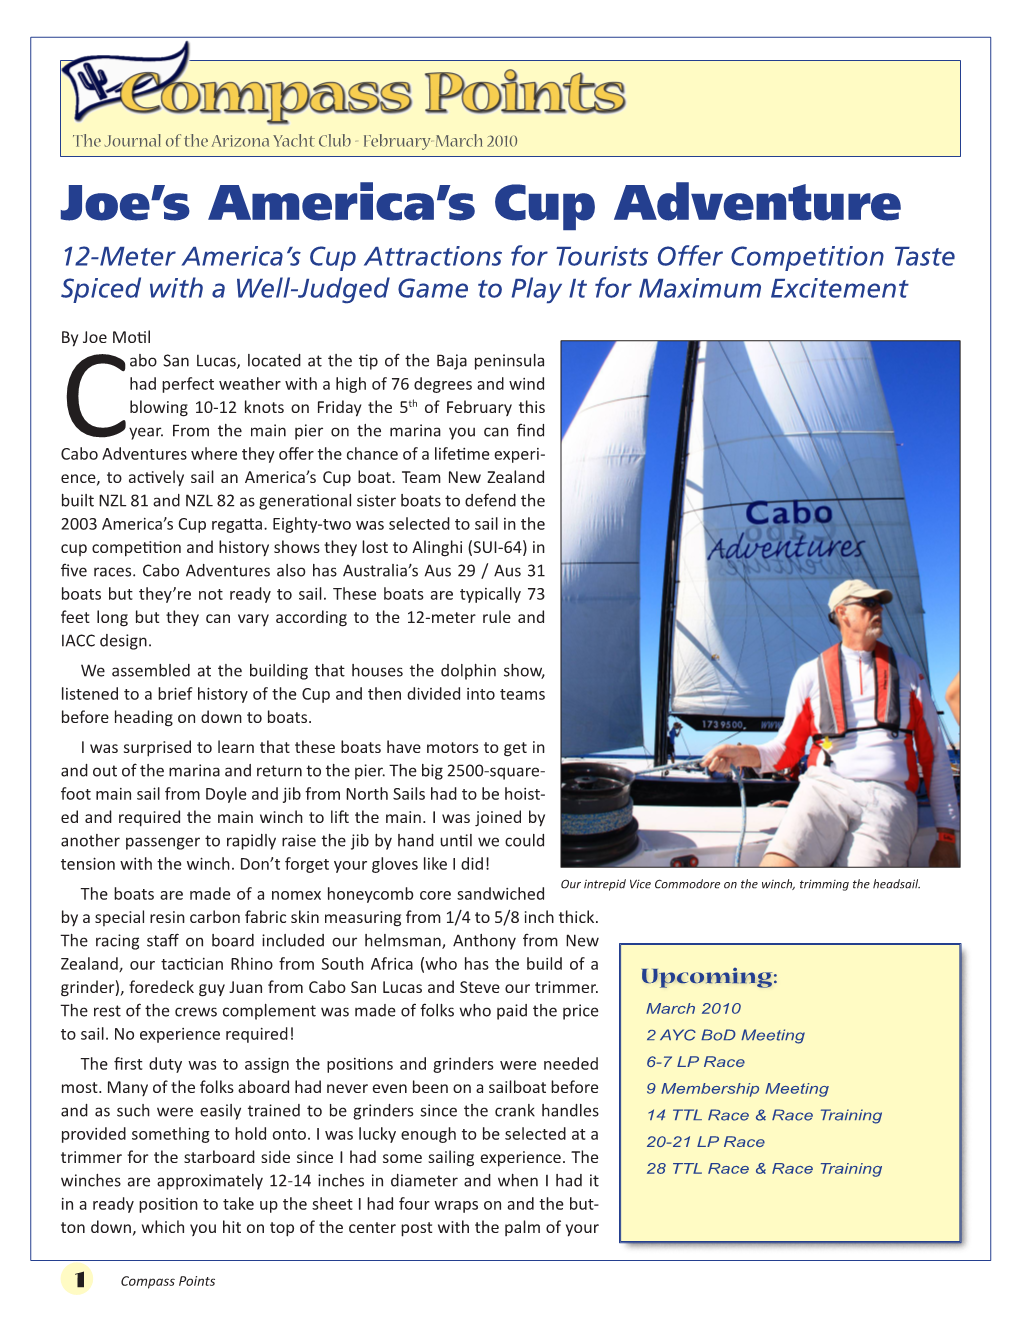 Joe's America's Cup Adventure